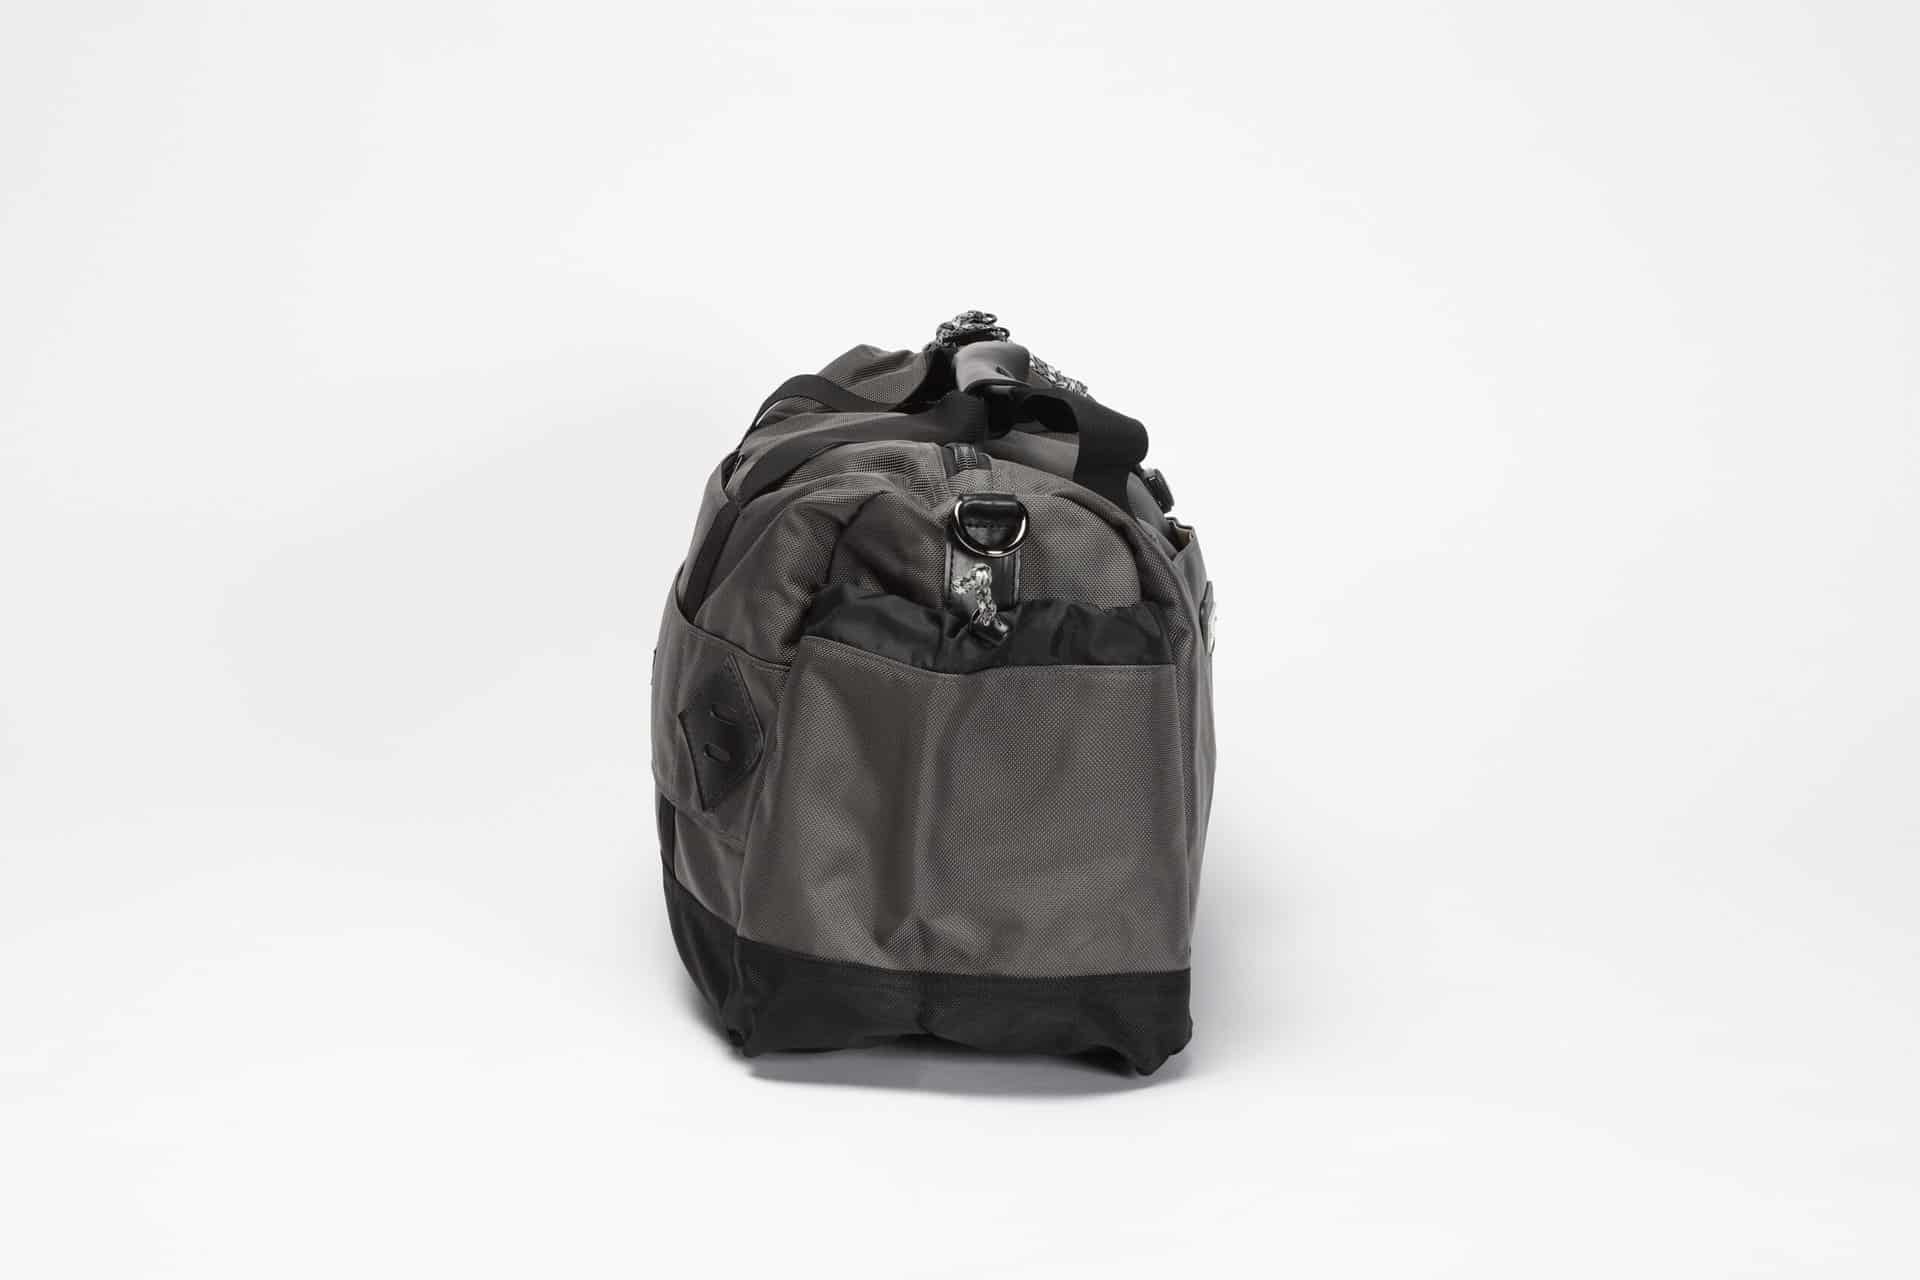 GOBI Duffel Bag Graphite with Black Webbing - GOBI Racks